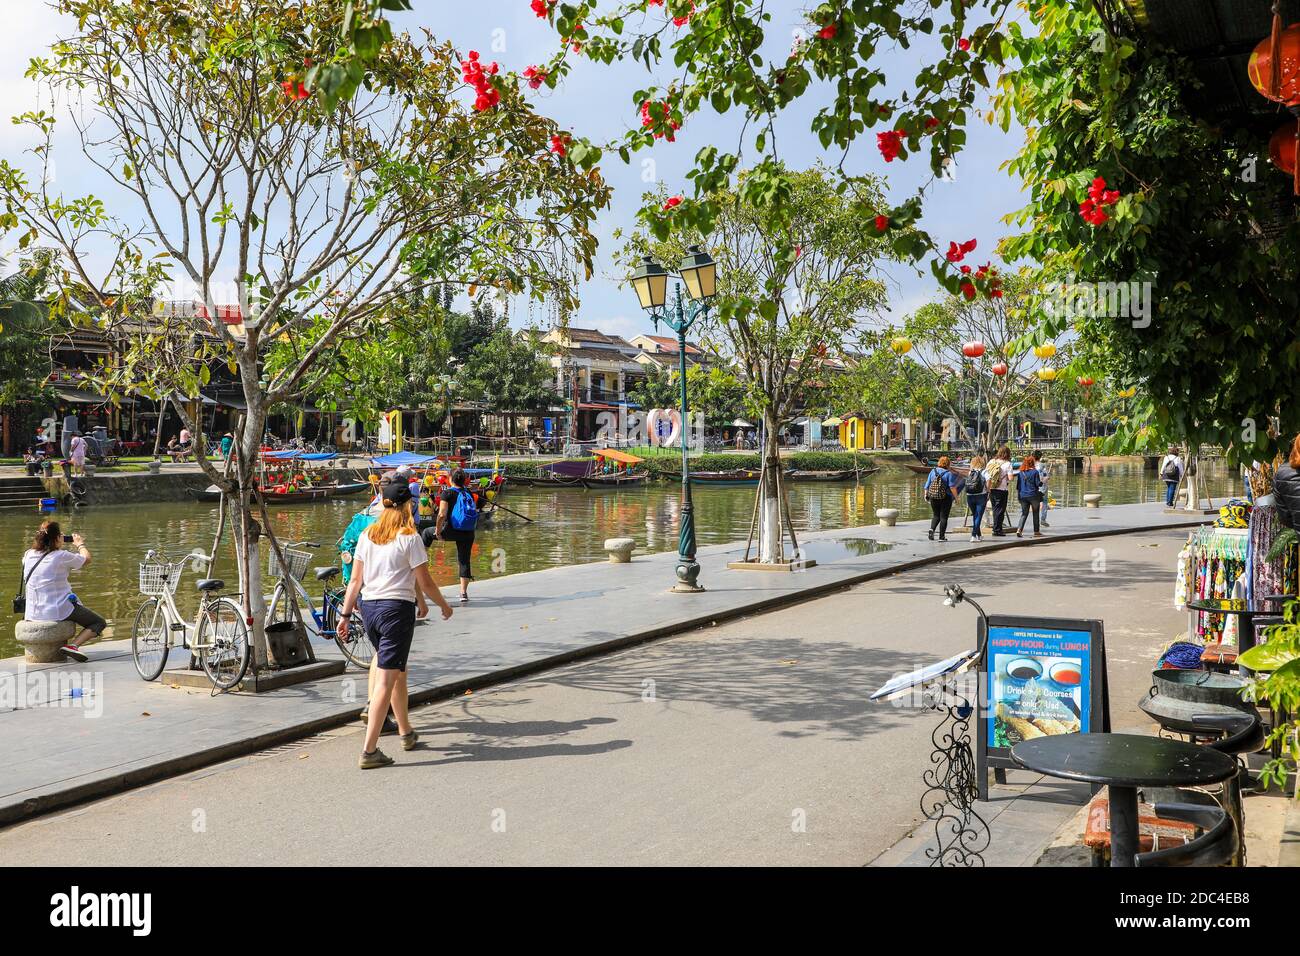 Bach Dang Street y coloridos barcos turísticos en el río Thu Bon, Hoi An, Vietnam, Asia Foto de stock